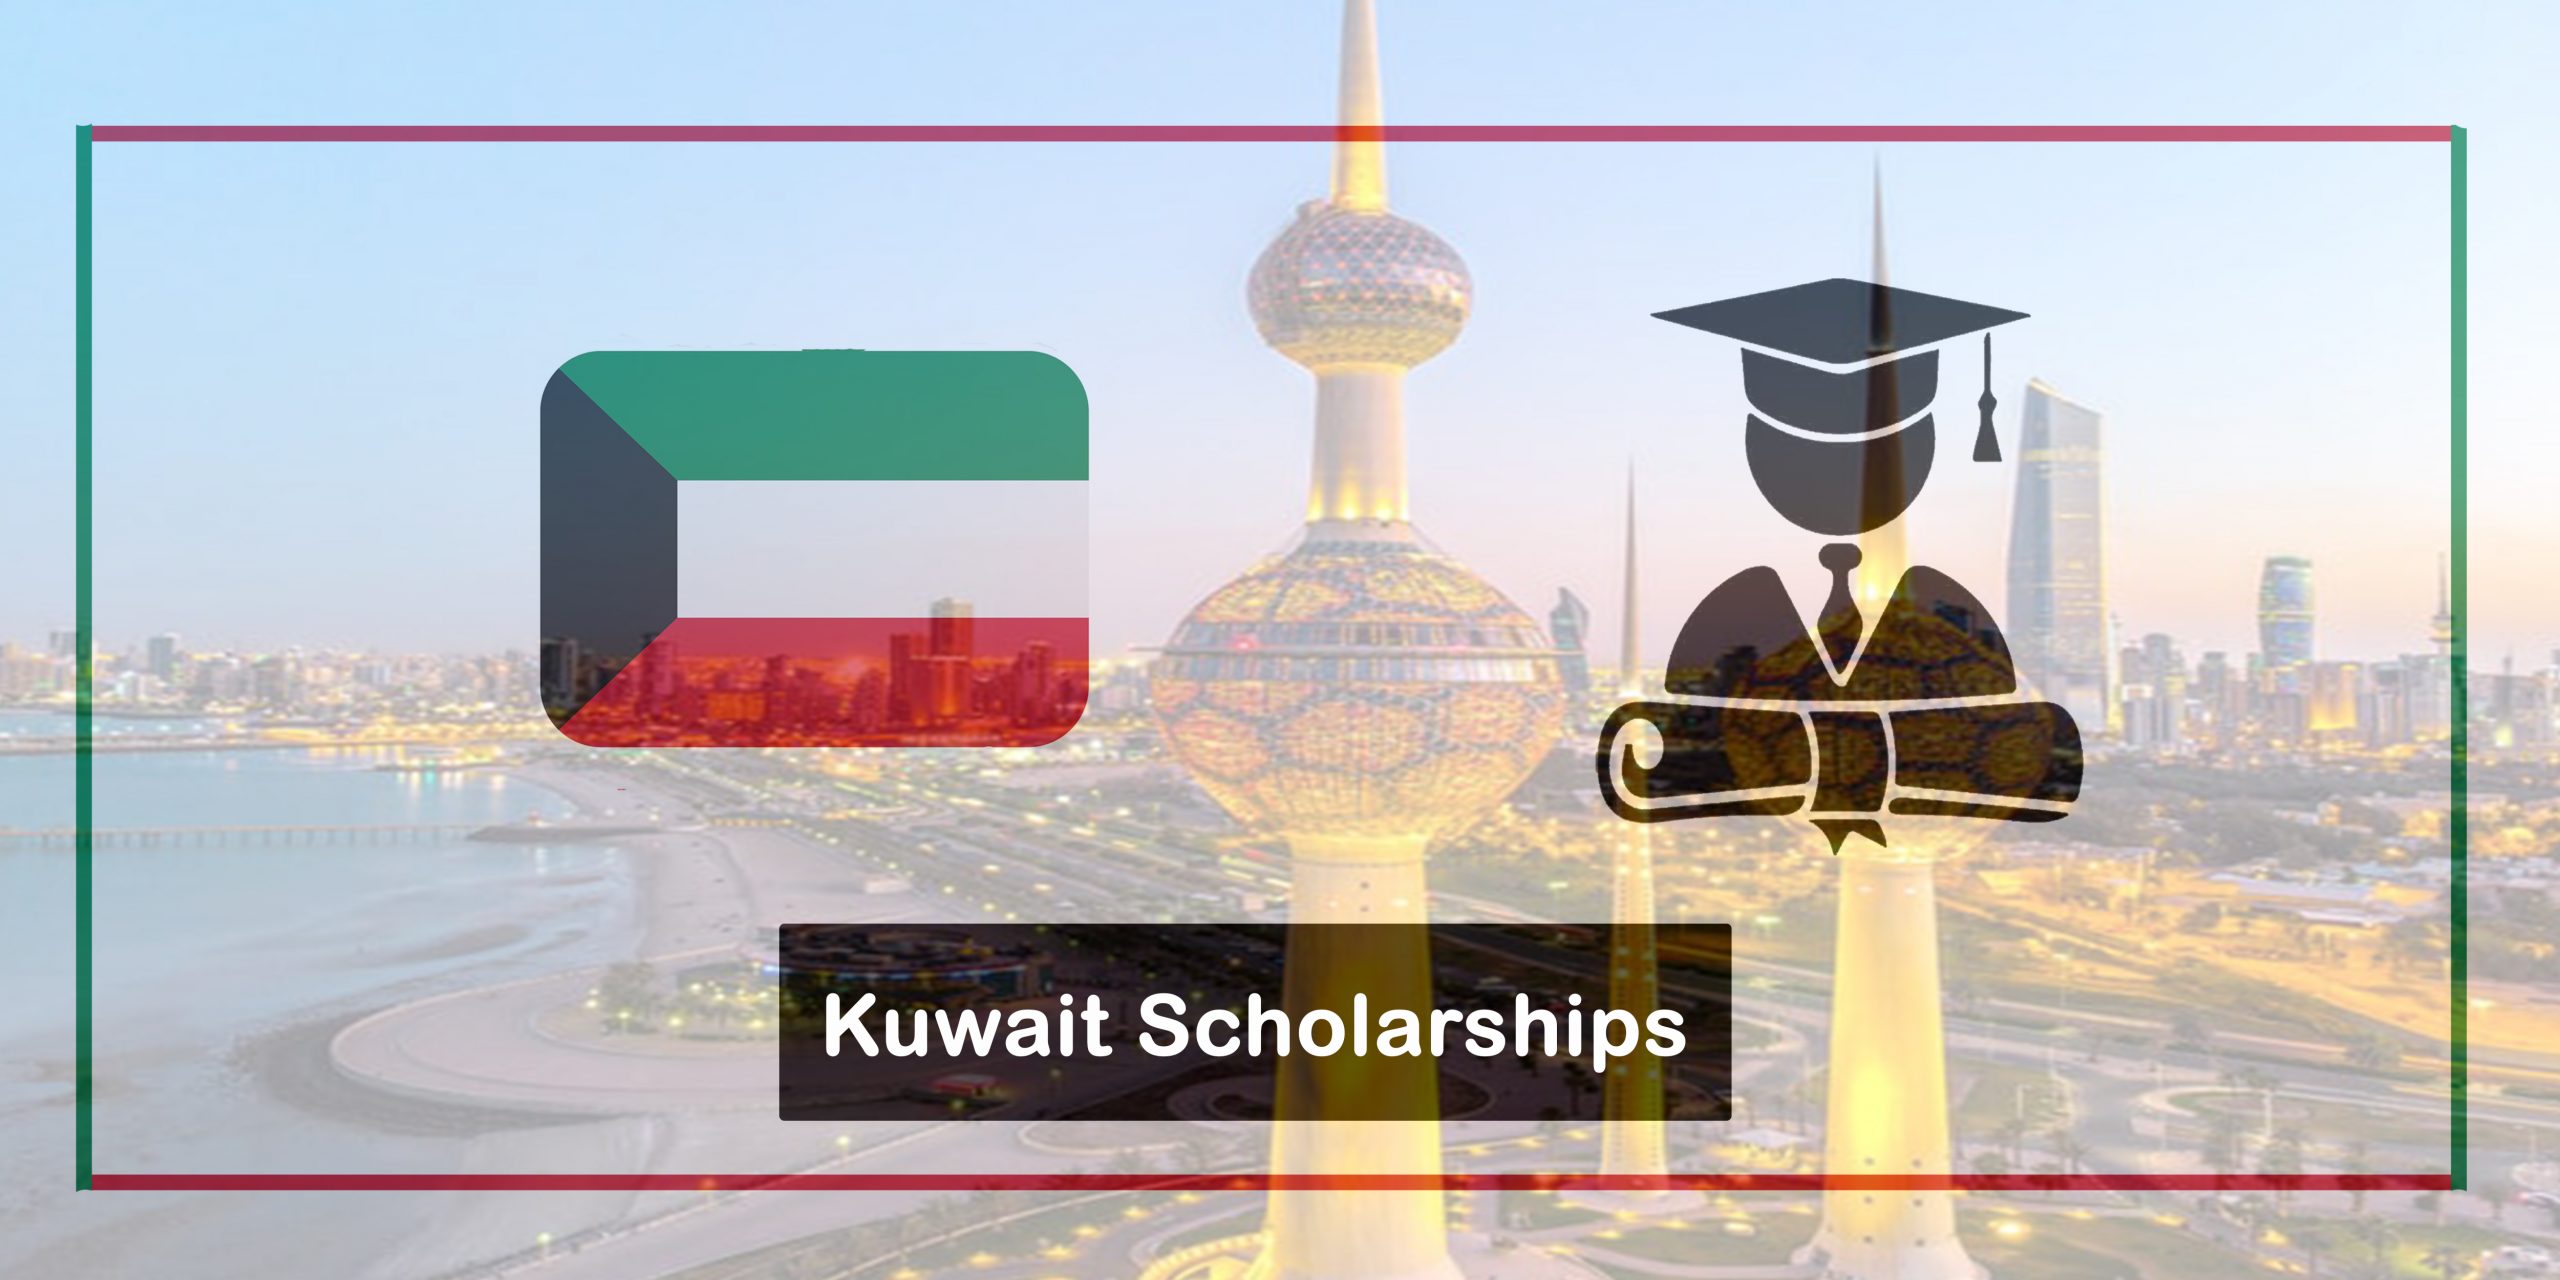 Kuwait Scholarships